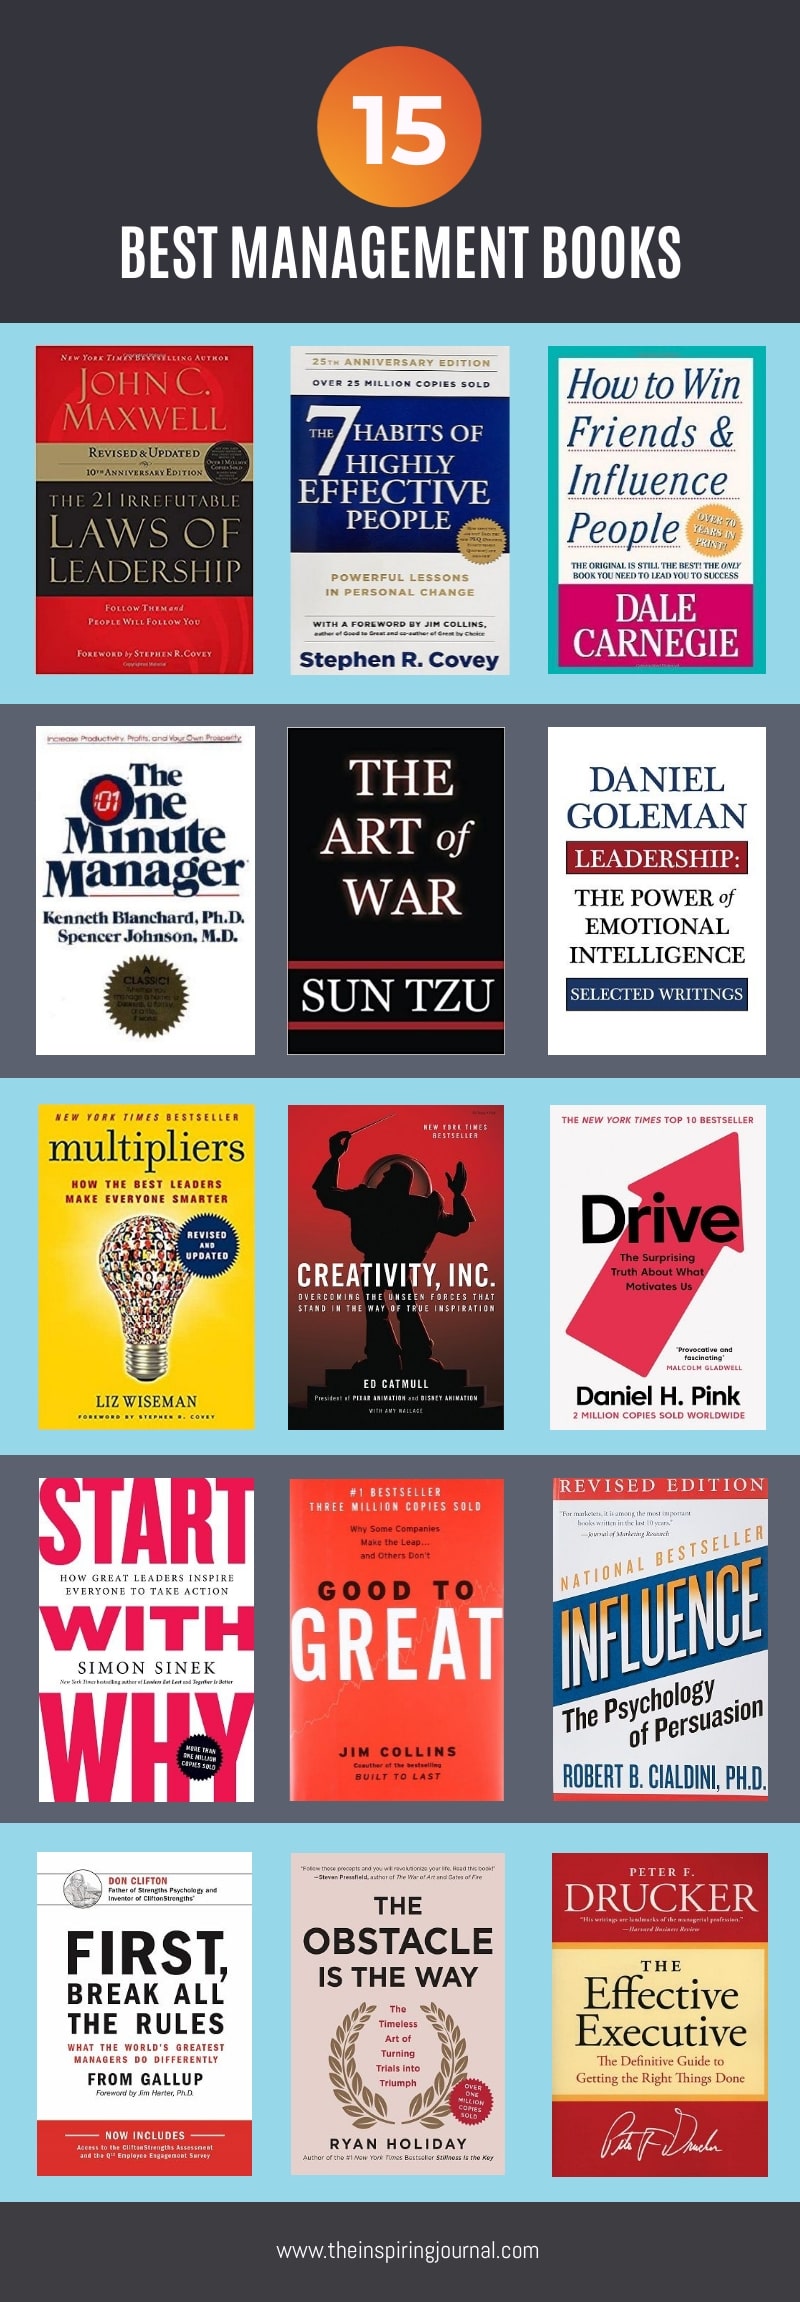 best management books infographic The Inspiring Journal